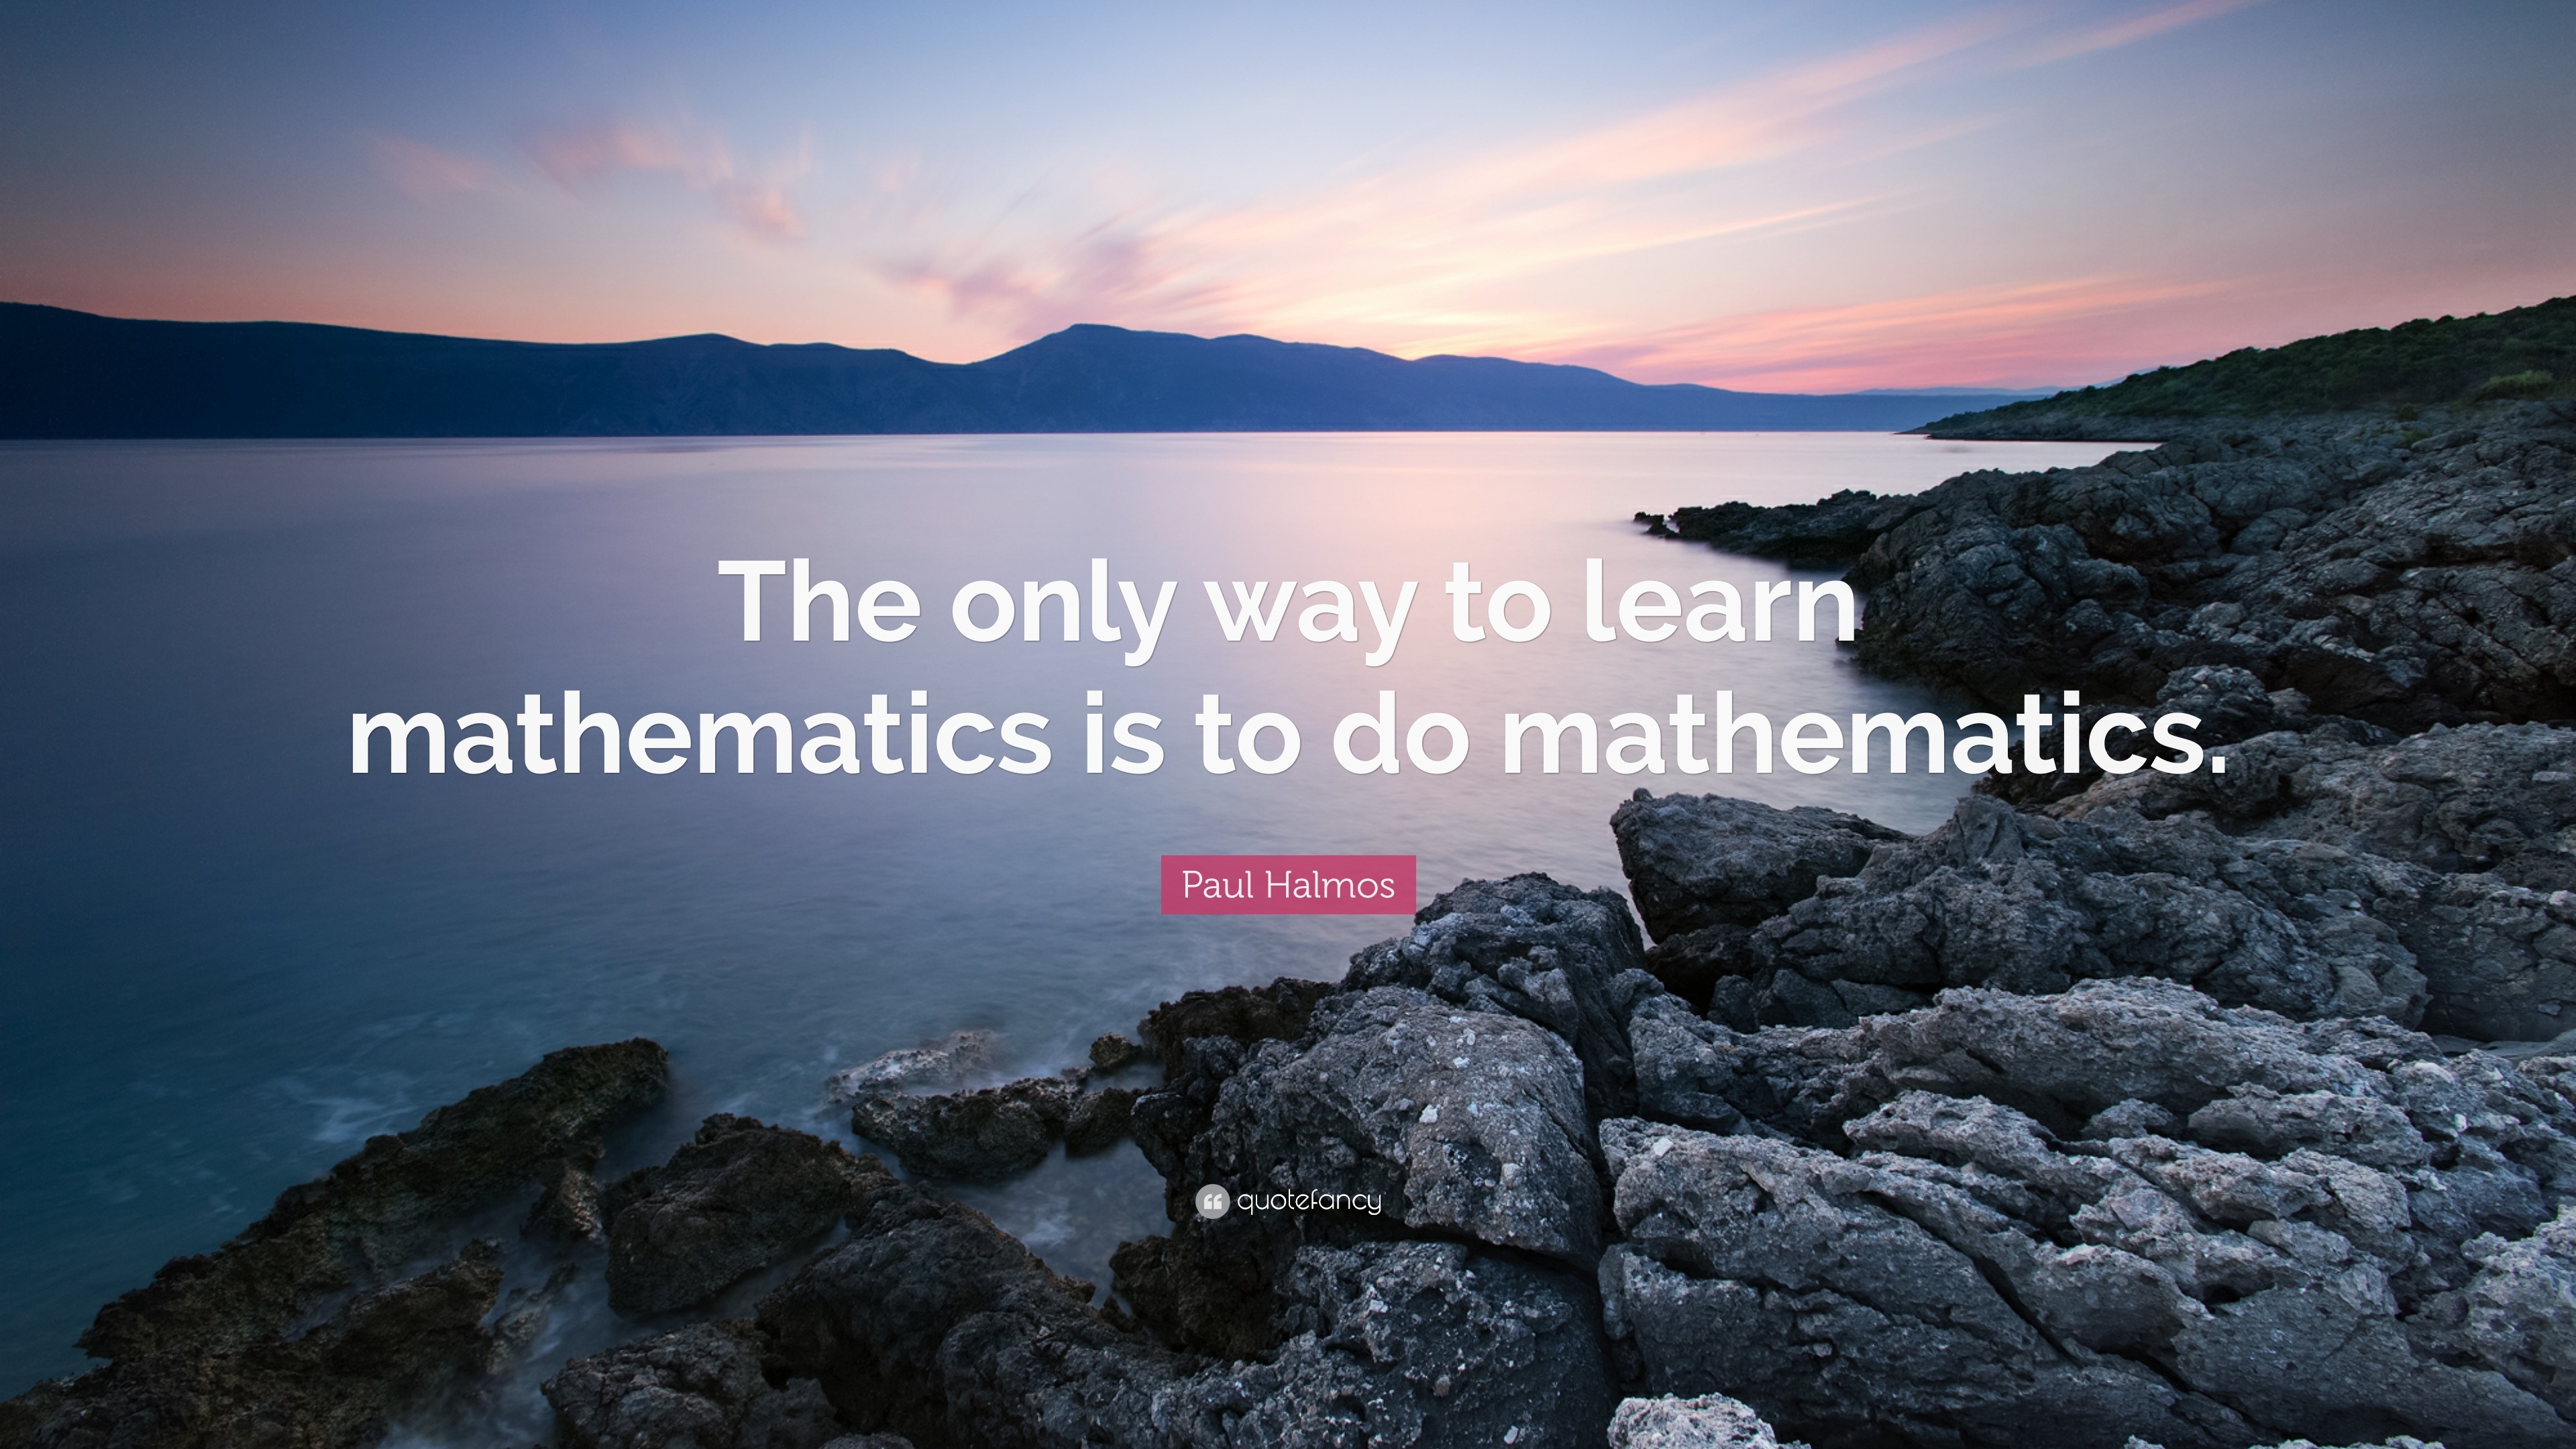 Halmos how to write mathematics